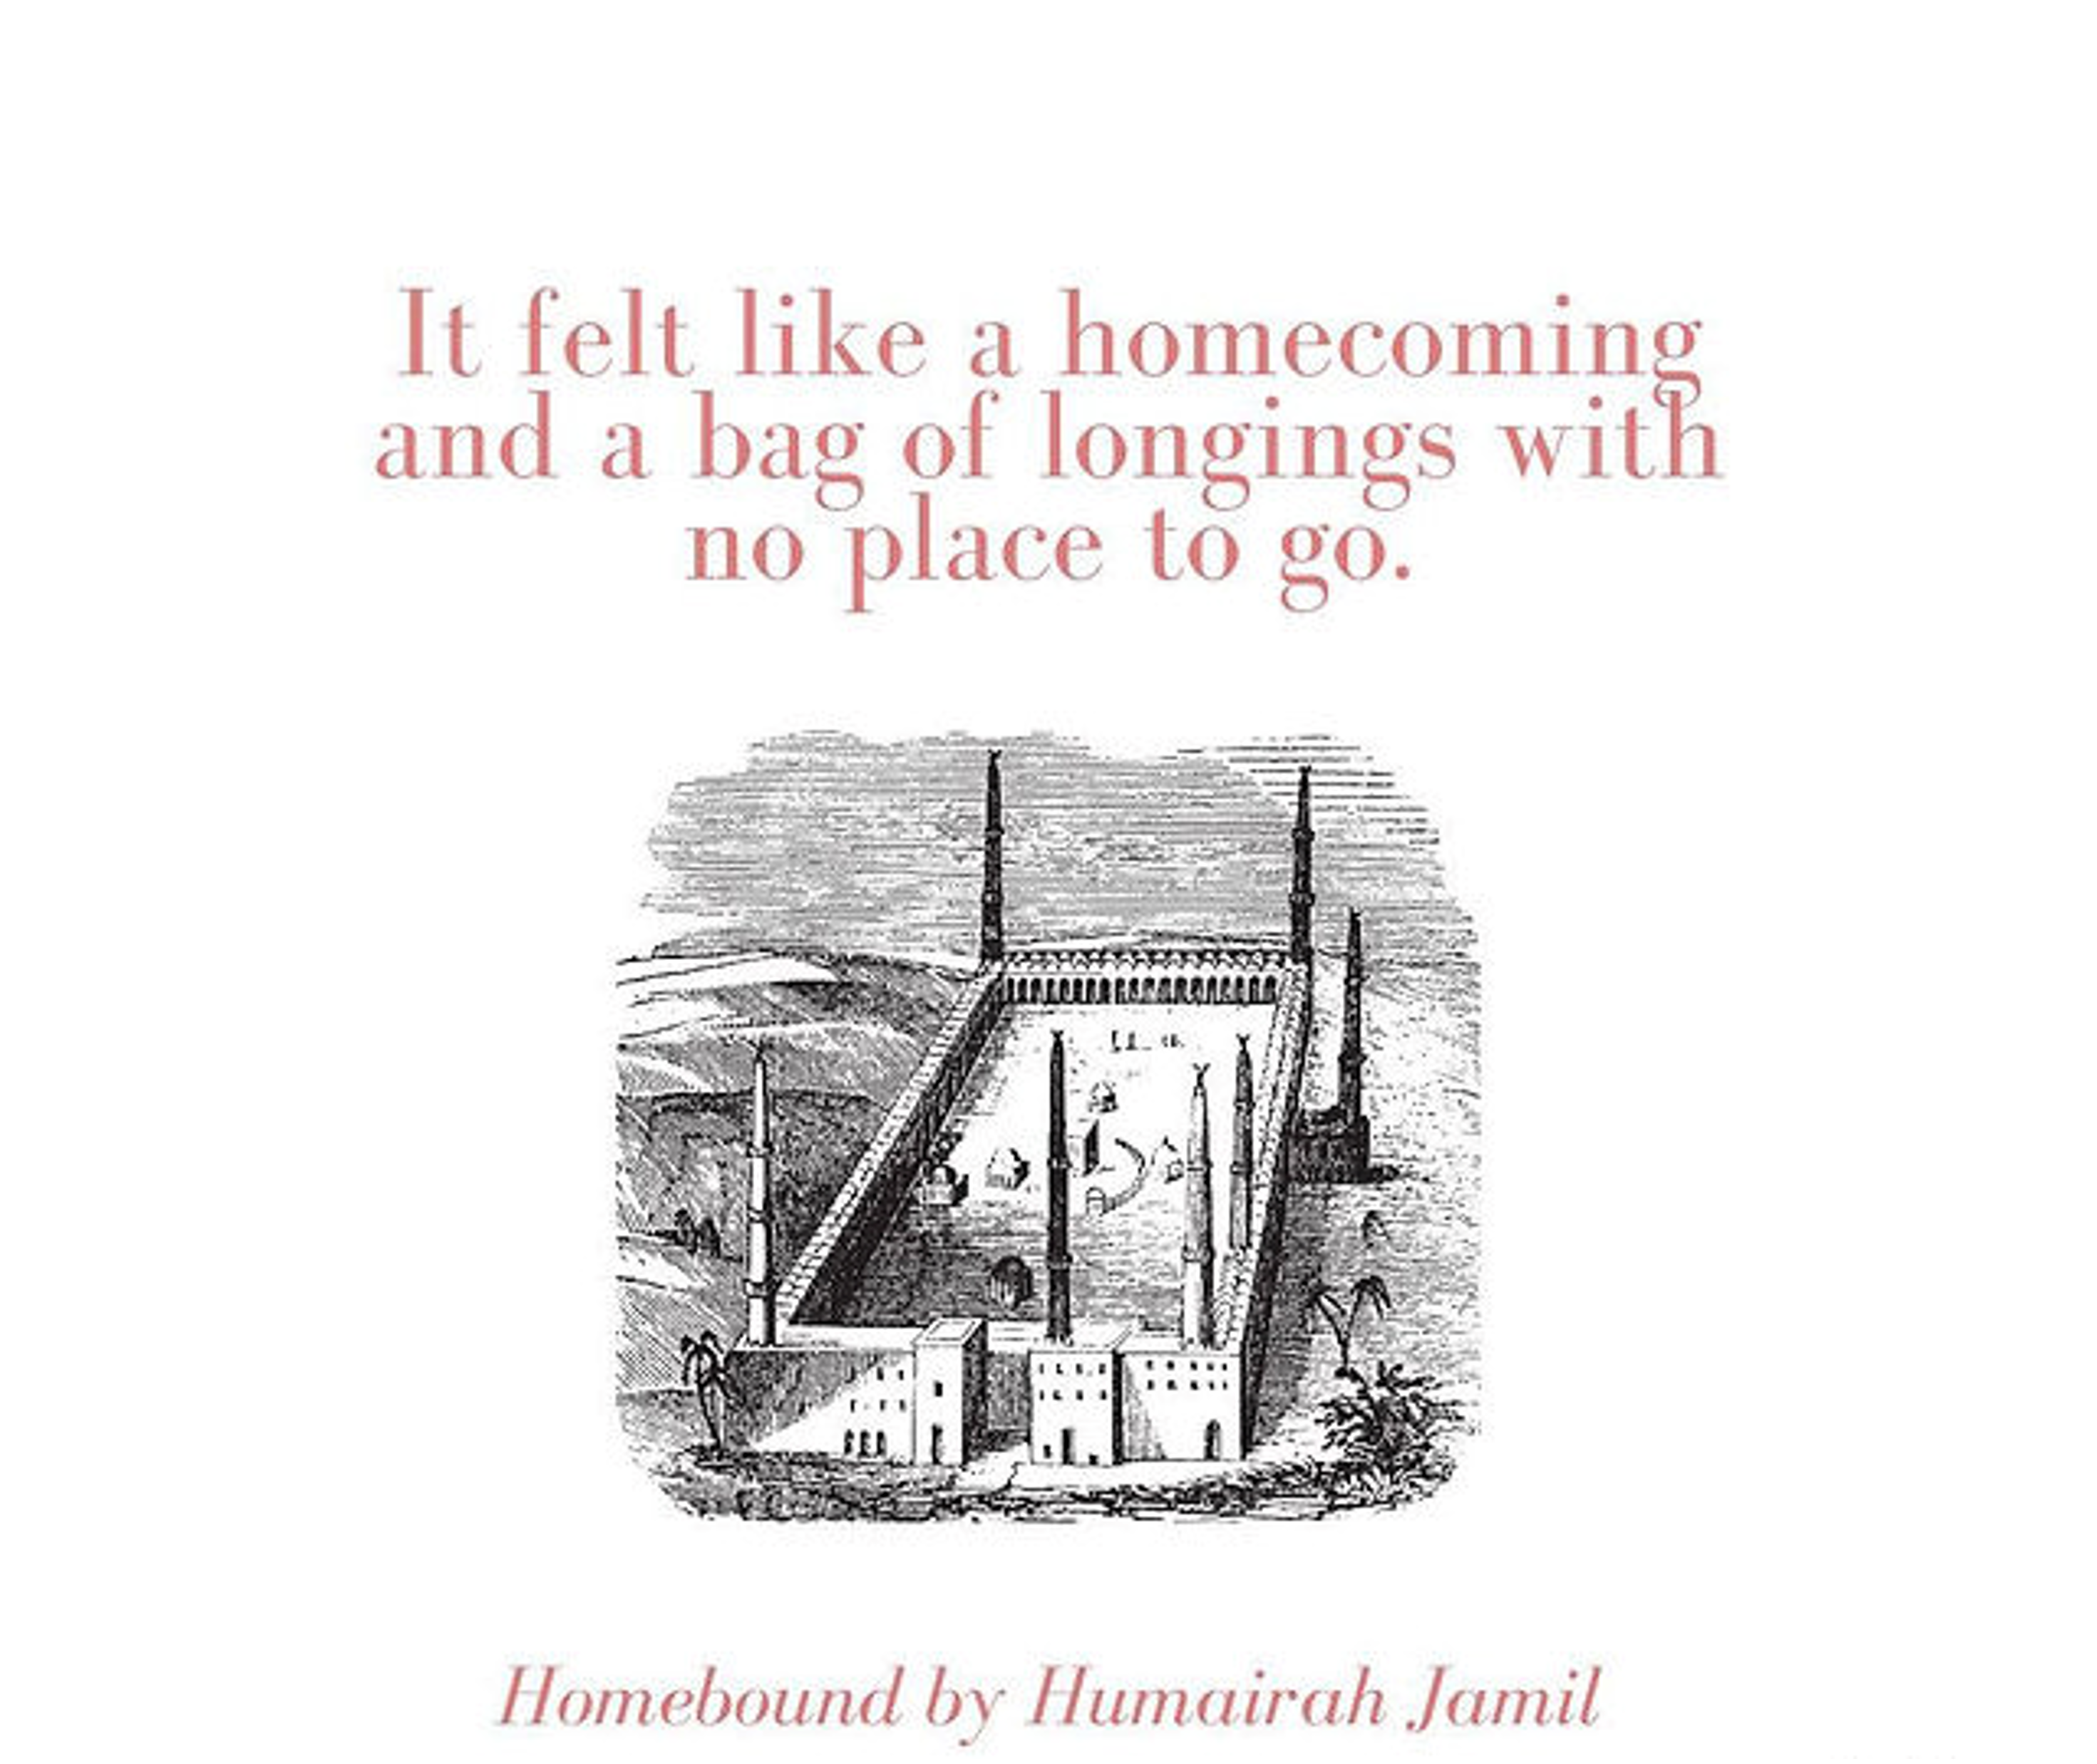 Homebound by Humairah Jamil